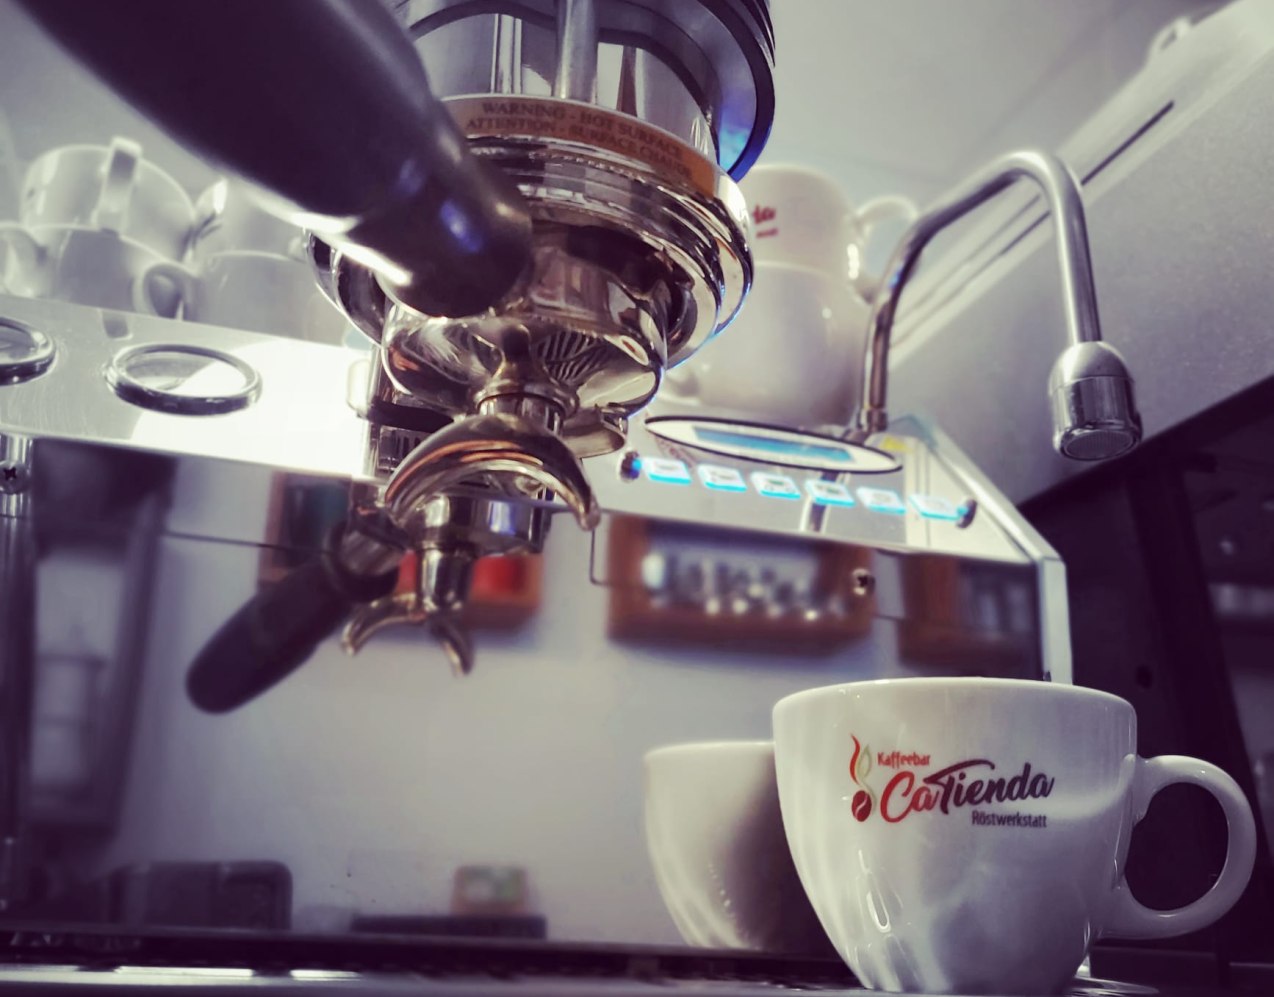 Espressoshot von CaTienda, © CaTienda